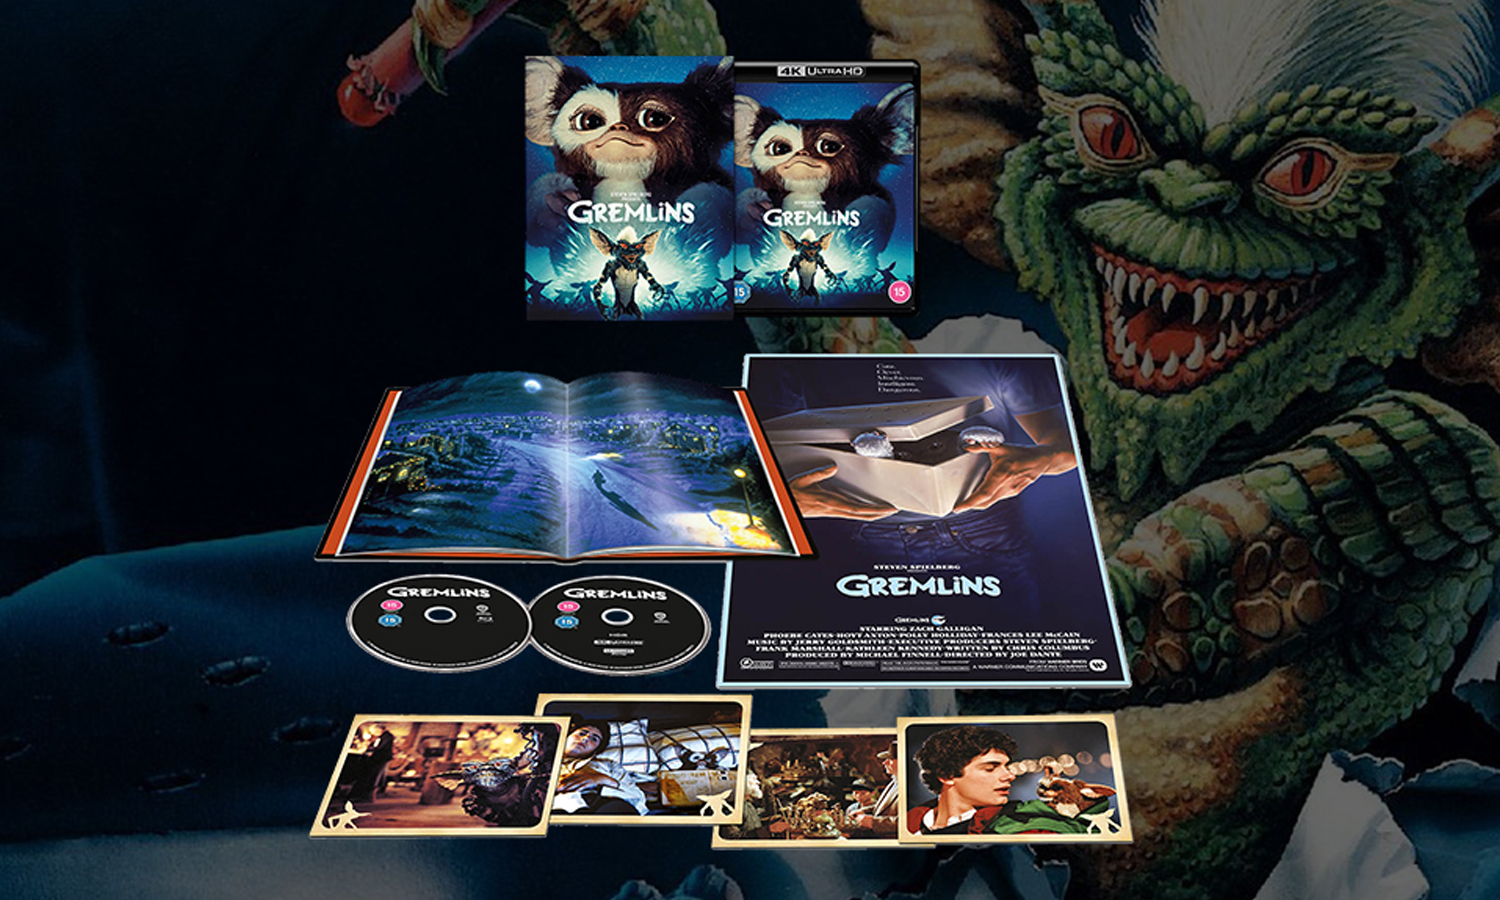 Coffret Blu Ray 4K Collector Gremlins : où l'acheter ?